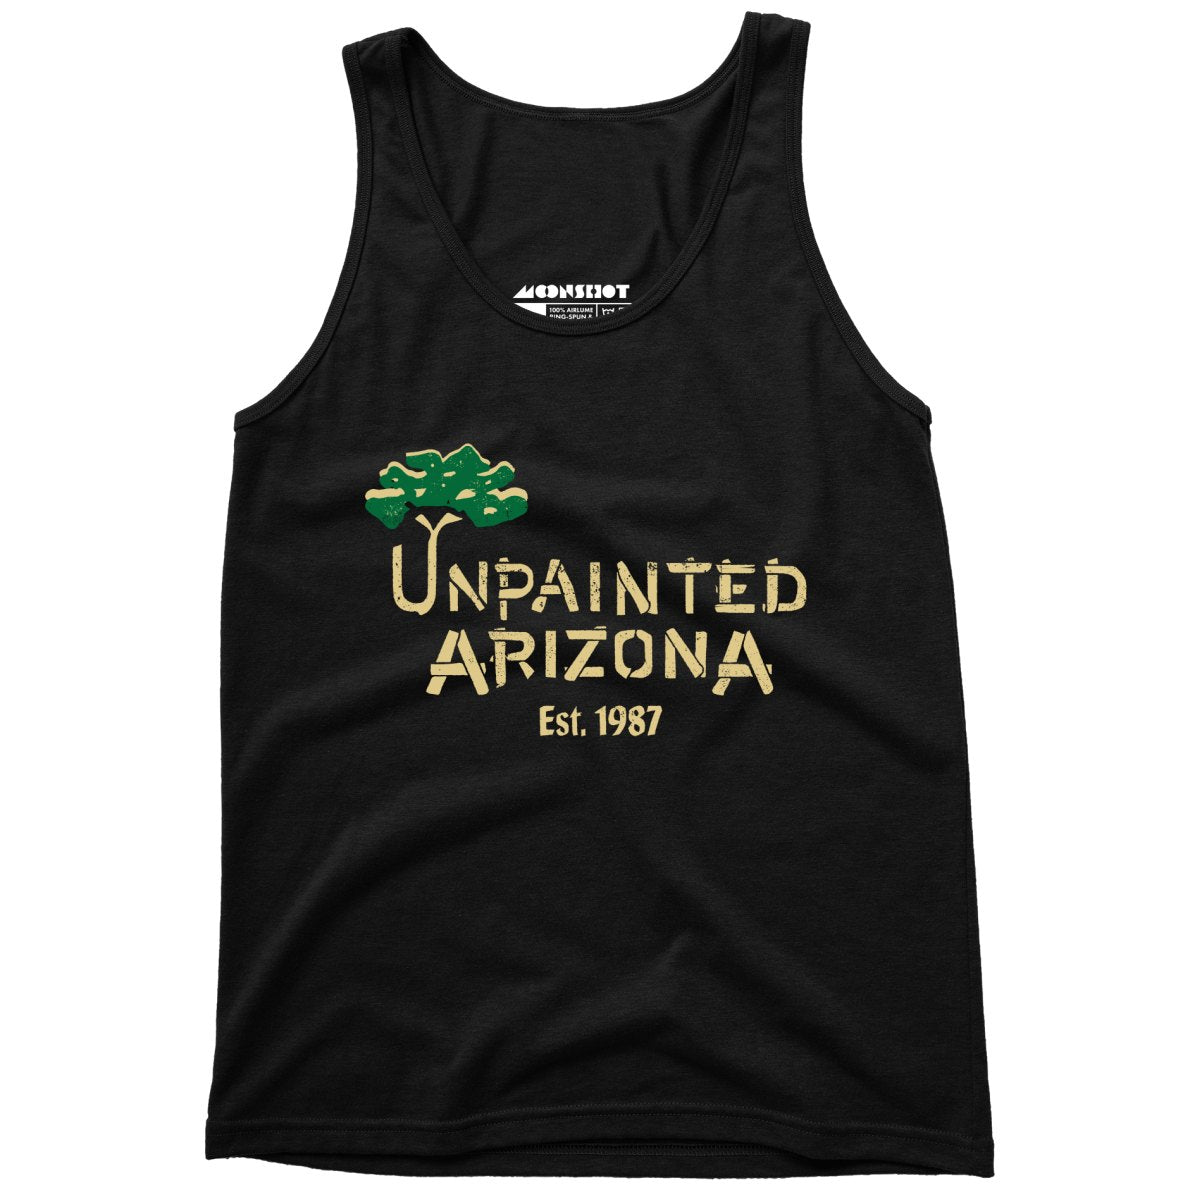 Unpainted Arizona - Unisex Tank Top